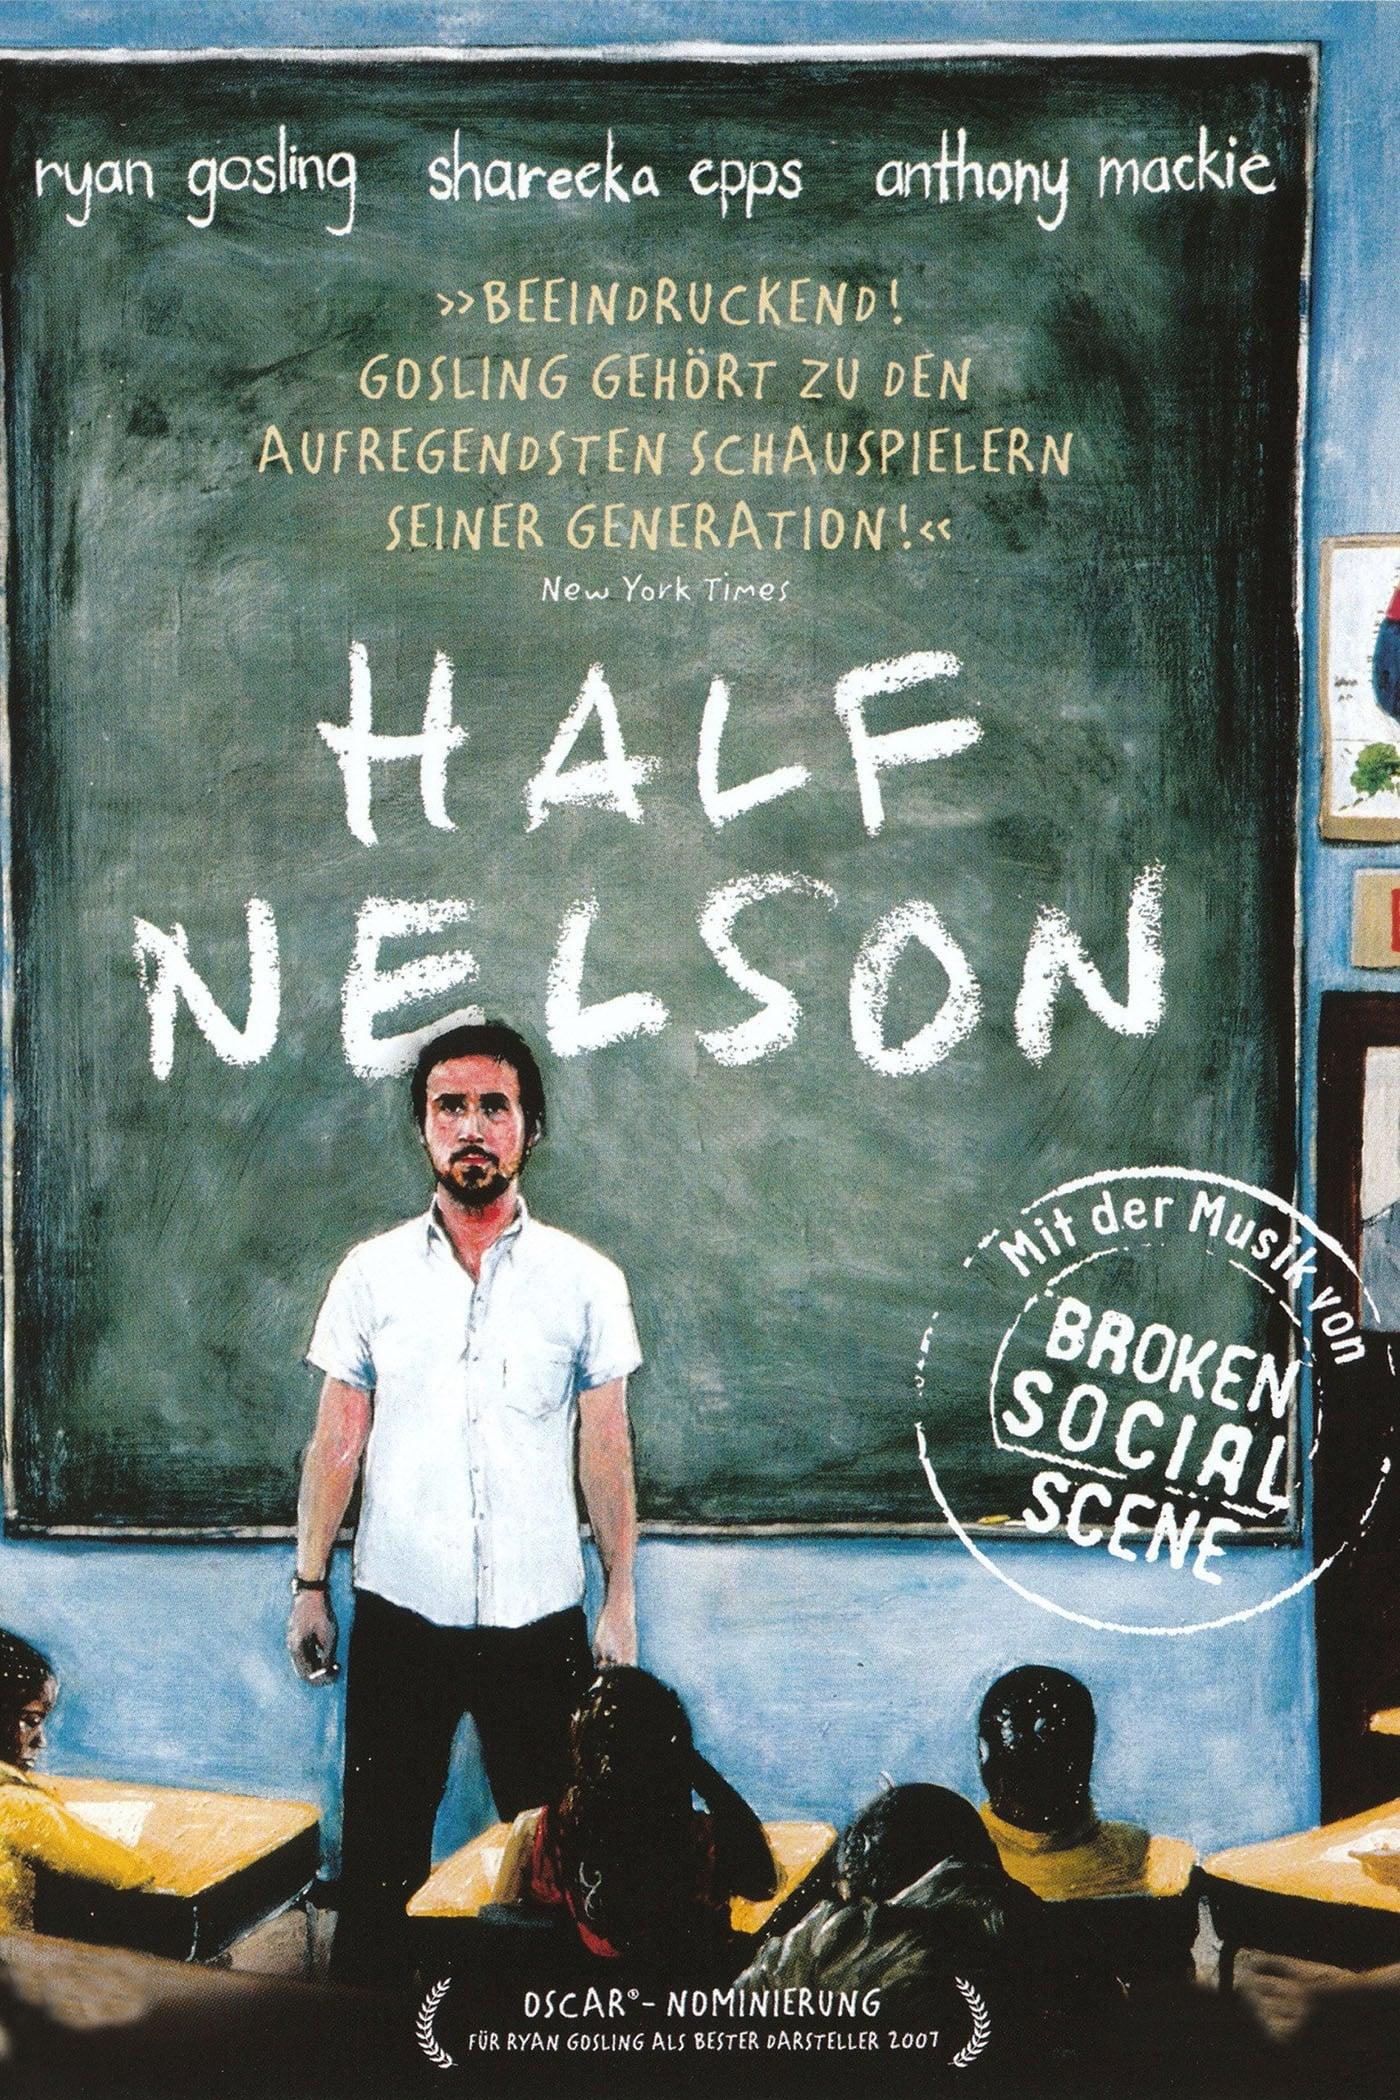 Half Nelson poster